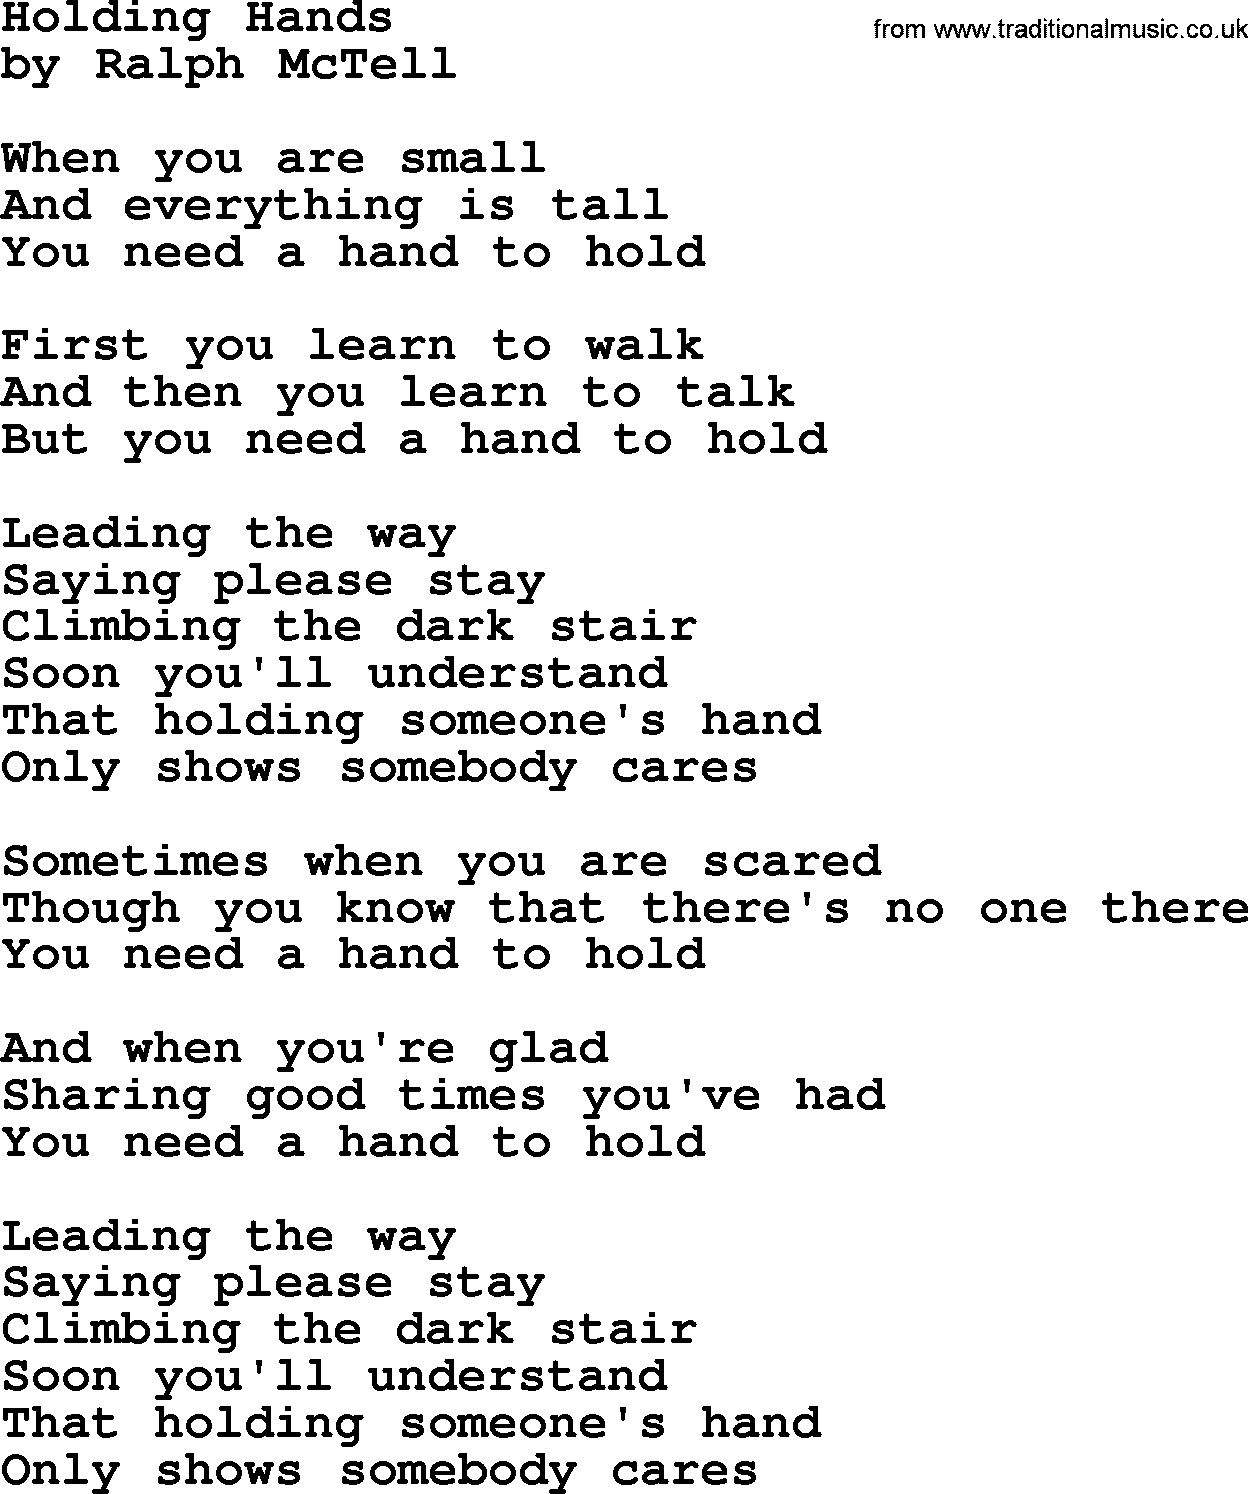 Ralph McTell Song: Holding Hands, lyrics